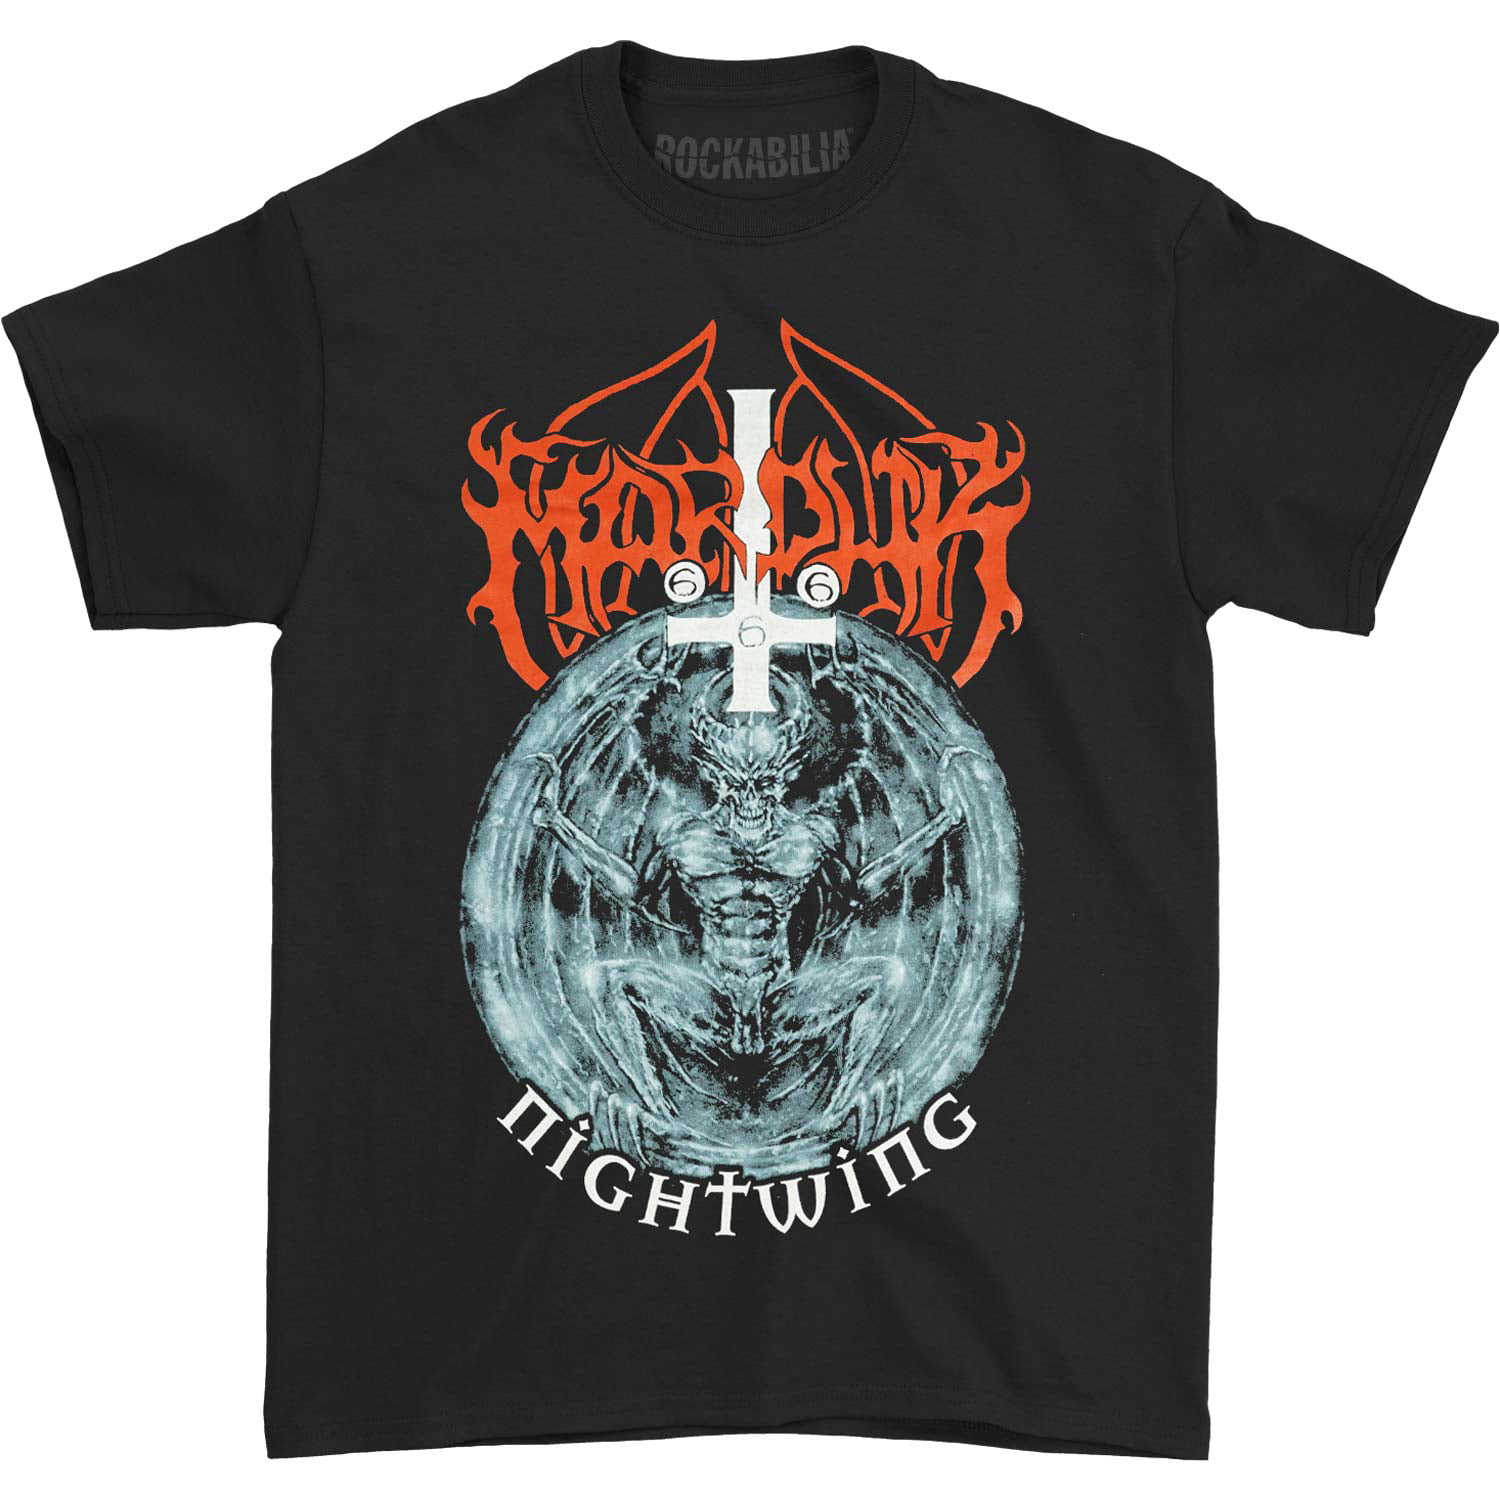 Marduk - Marduk Men's Nightwing T-shirt Black - Walmart.com - Walmart.com